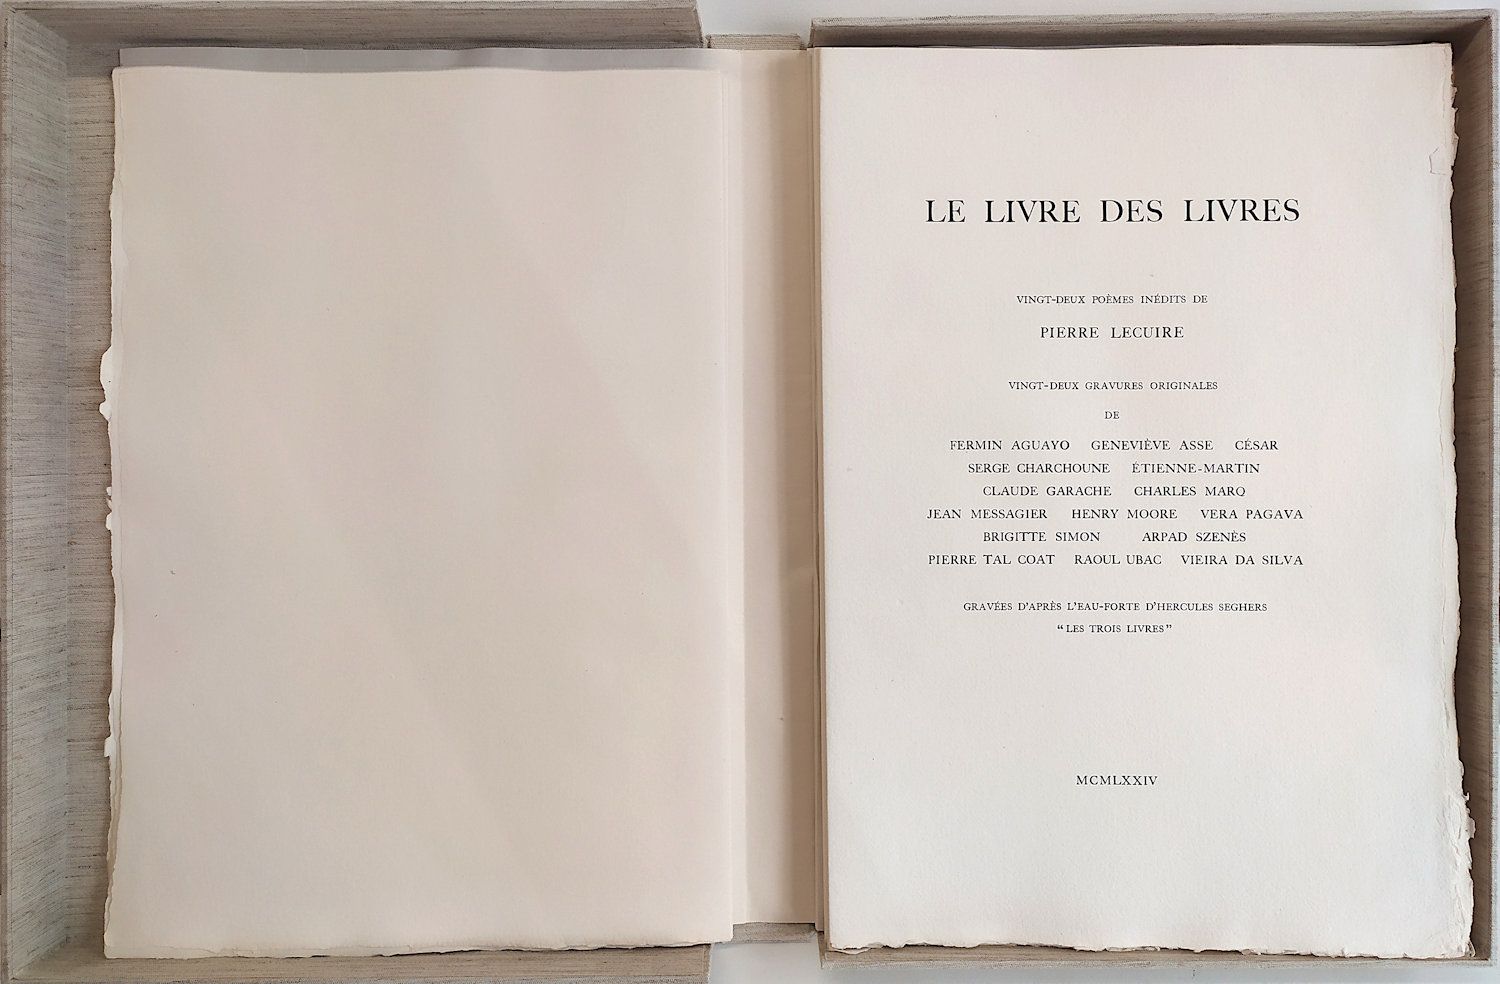 Pierre LECUIRE 艺术家的书，包括皮埃尔-勒奎尔的22首诗和15位艺术家的22幅原创版画：费尔明-阿瓜约、热纳维耶夫-阿塞、塞萨尔、塞尔日-沙丘内、&hellip;